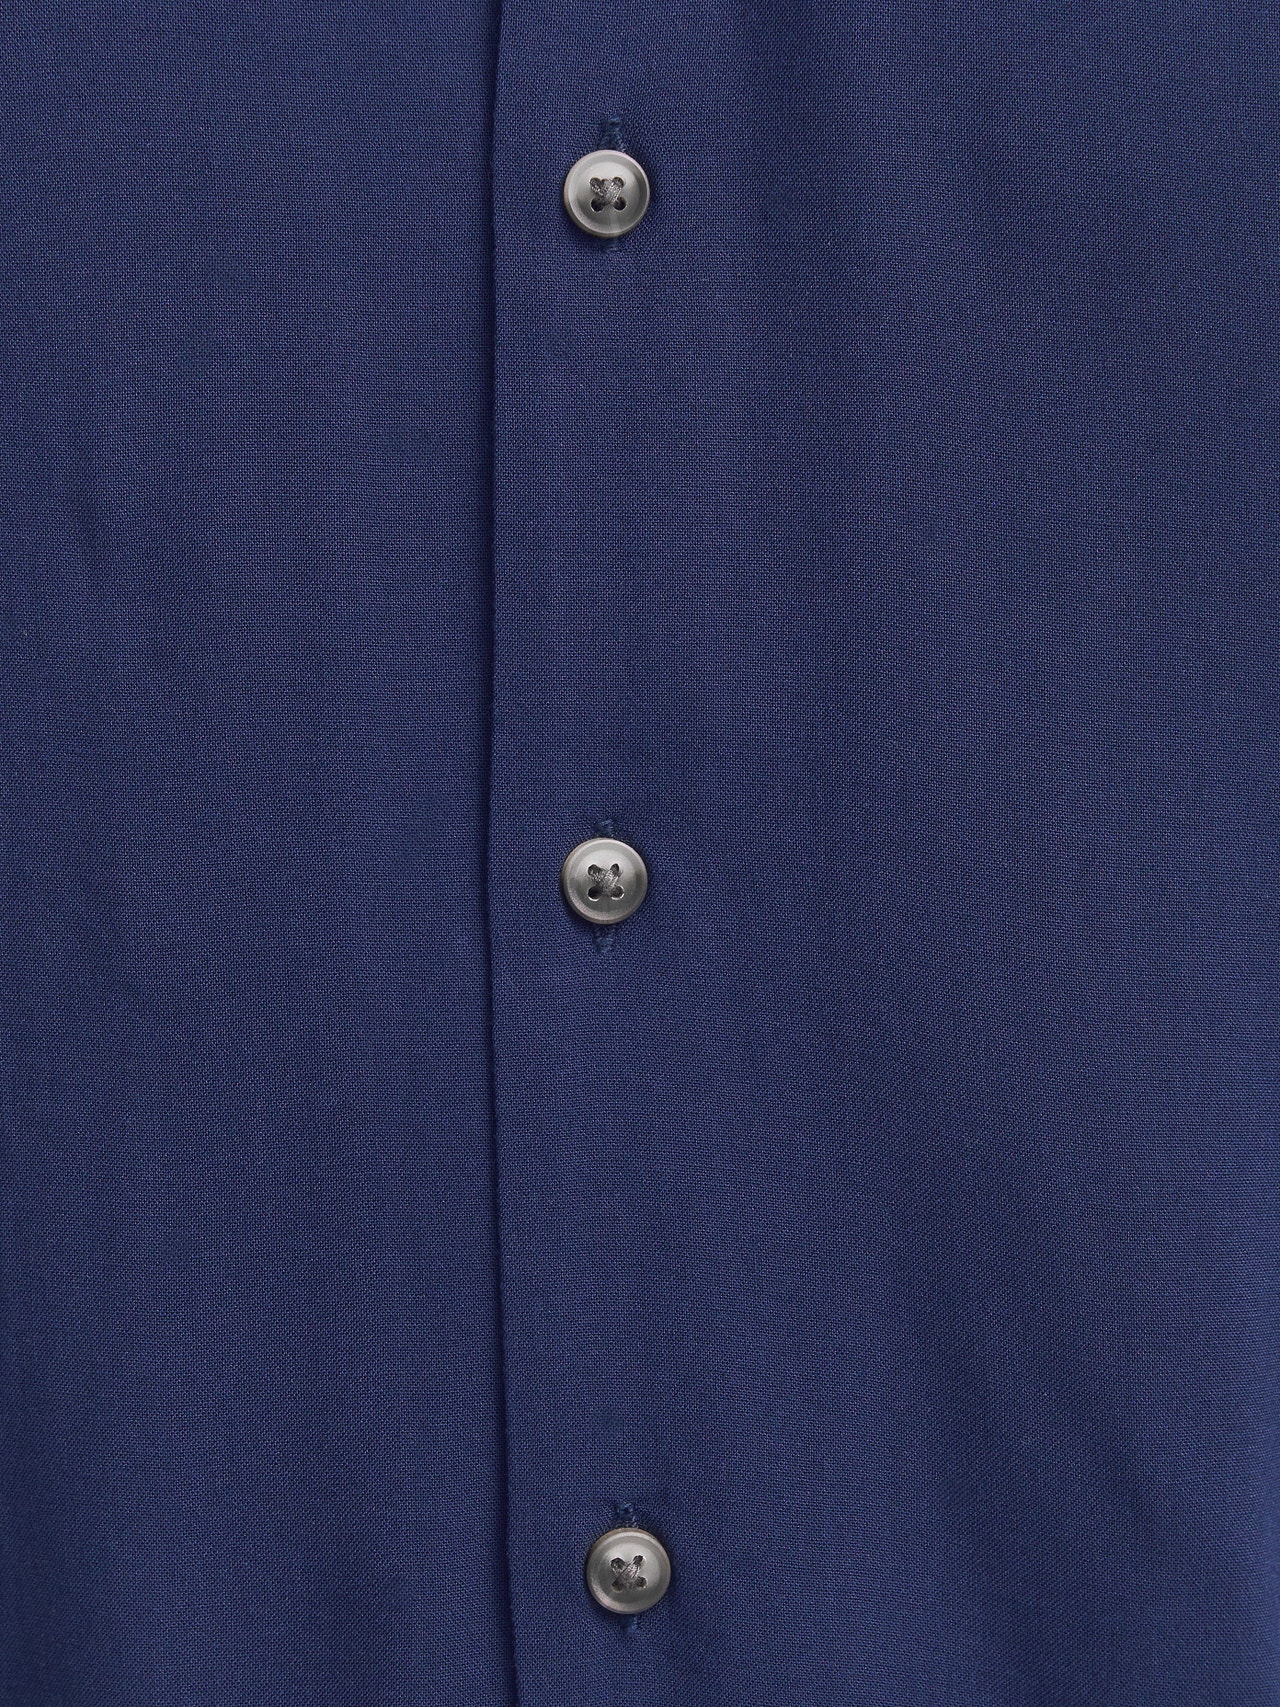 Jack & Jones Plus Size Relaxed Fit Shirt -Navy Blazer - 12253716